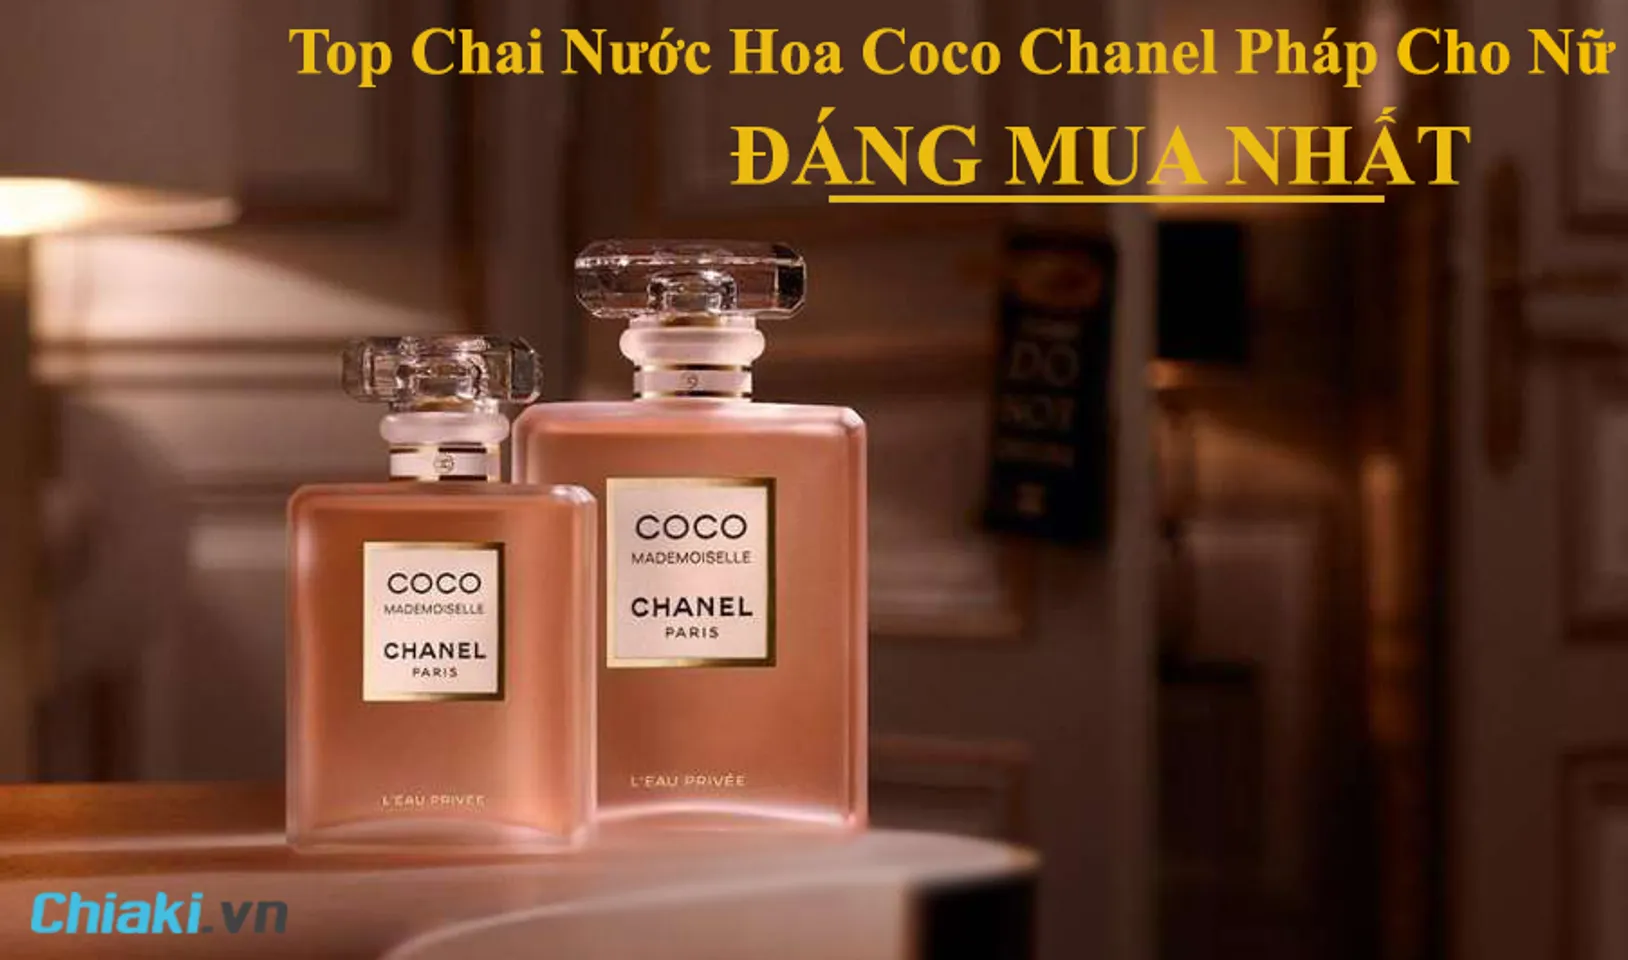 Top 6 Chai Nước Hoa Coco Chanel Pháp Thanh Lịch, Gợi Cảm Cho Nữ